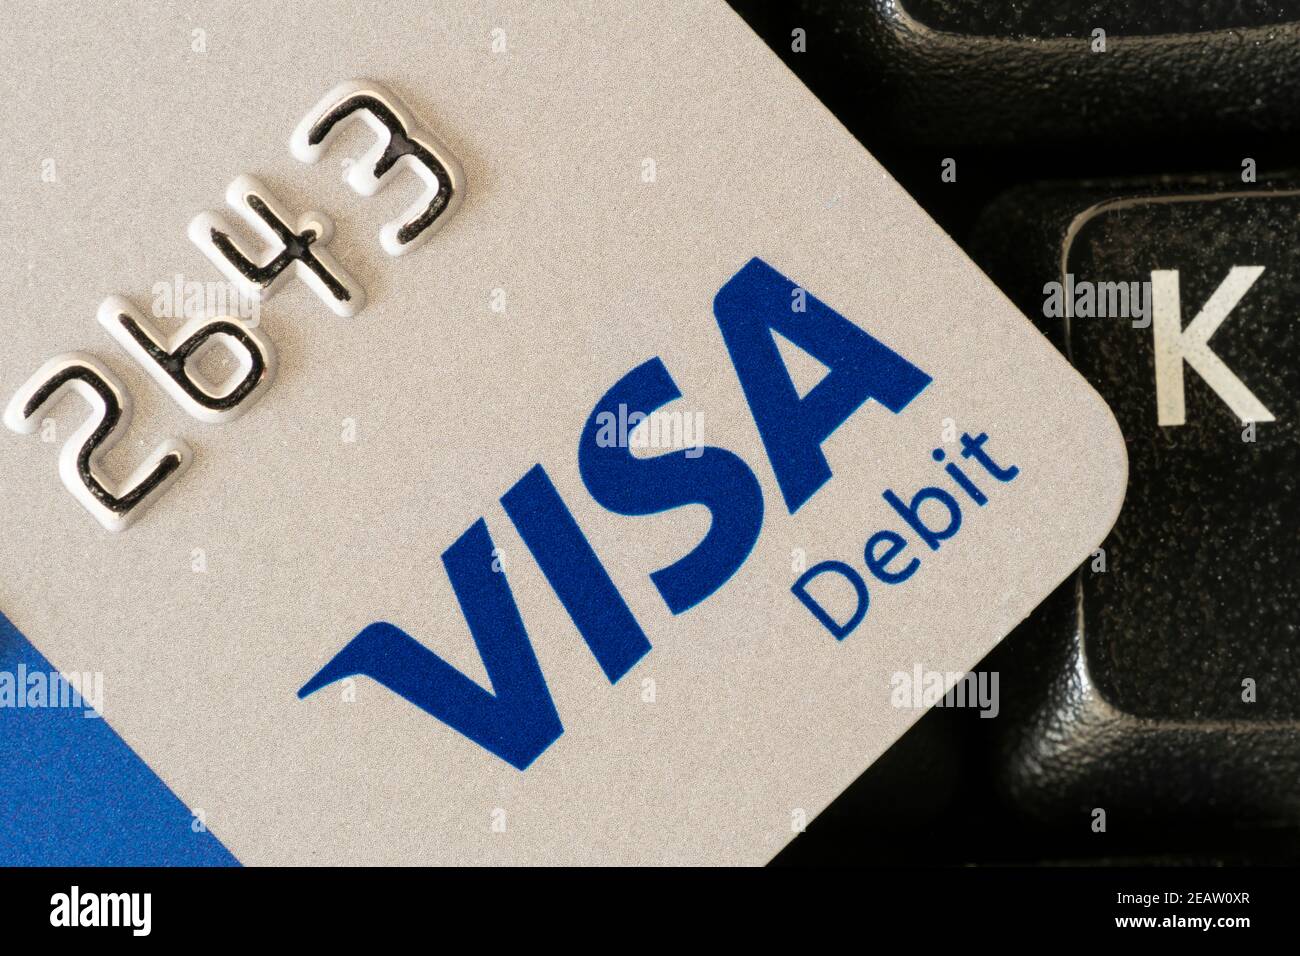 card number visa